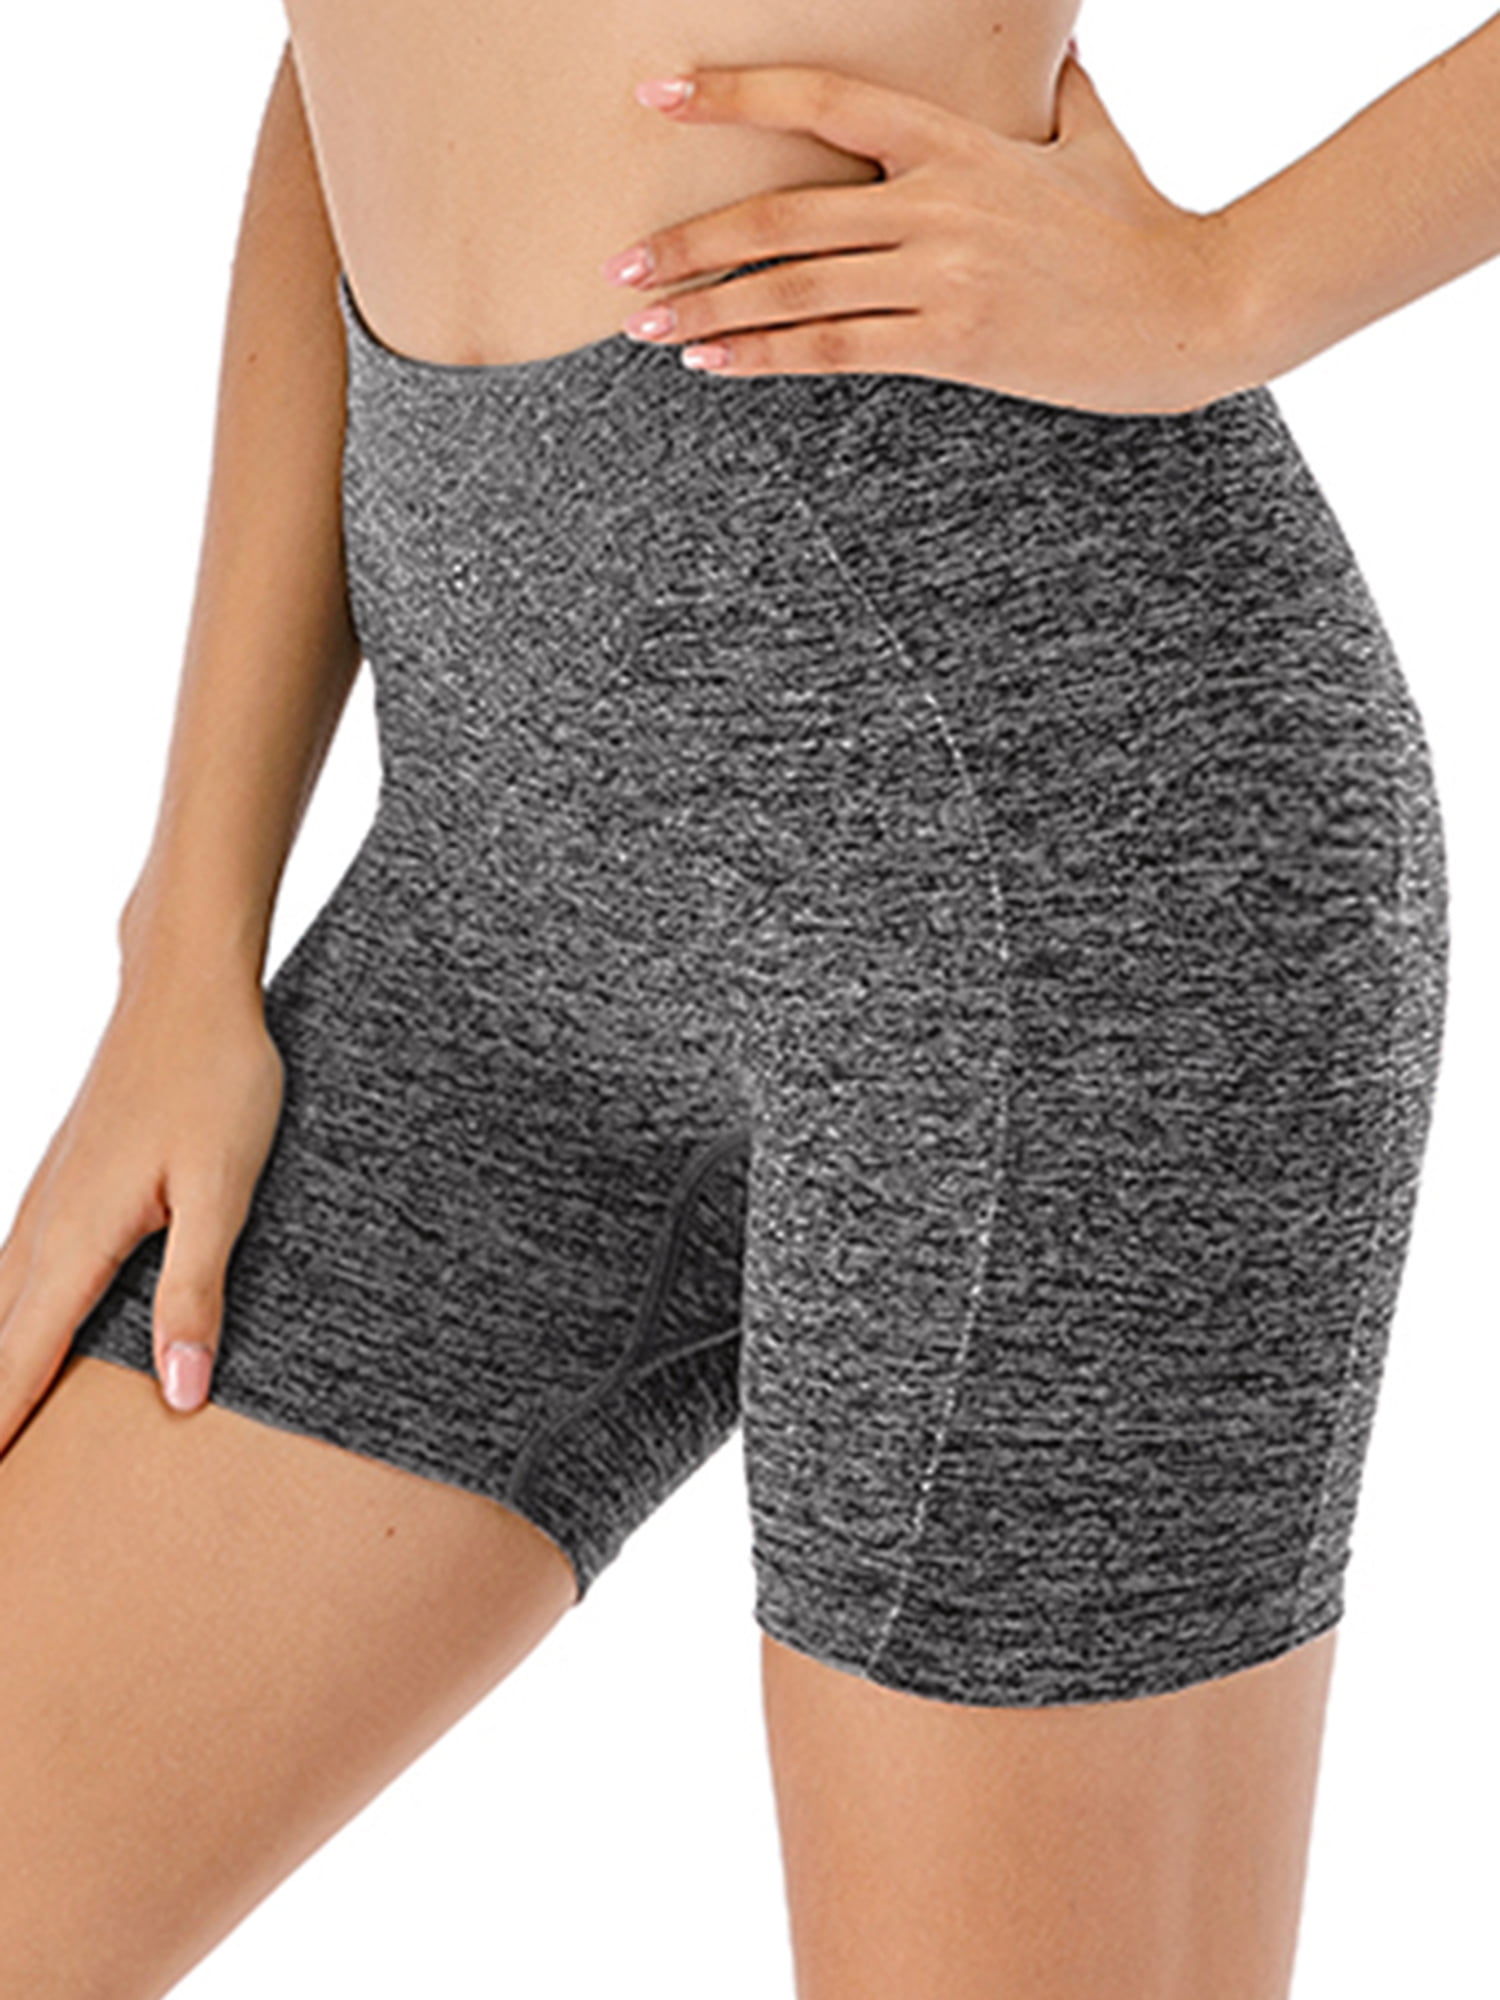 Hopgo Biker Shorts for Women High Waist Print 7 Yoga Shorts Workout Cycling Compression Comfy Pants Tights 